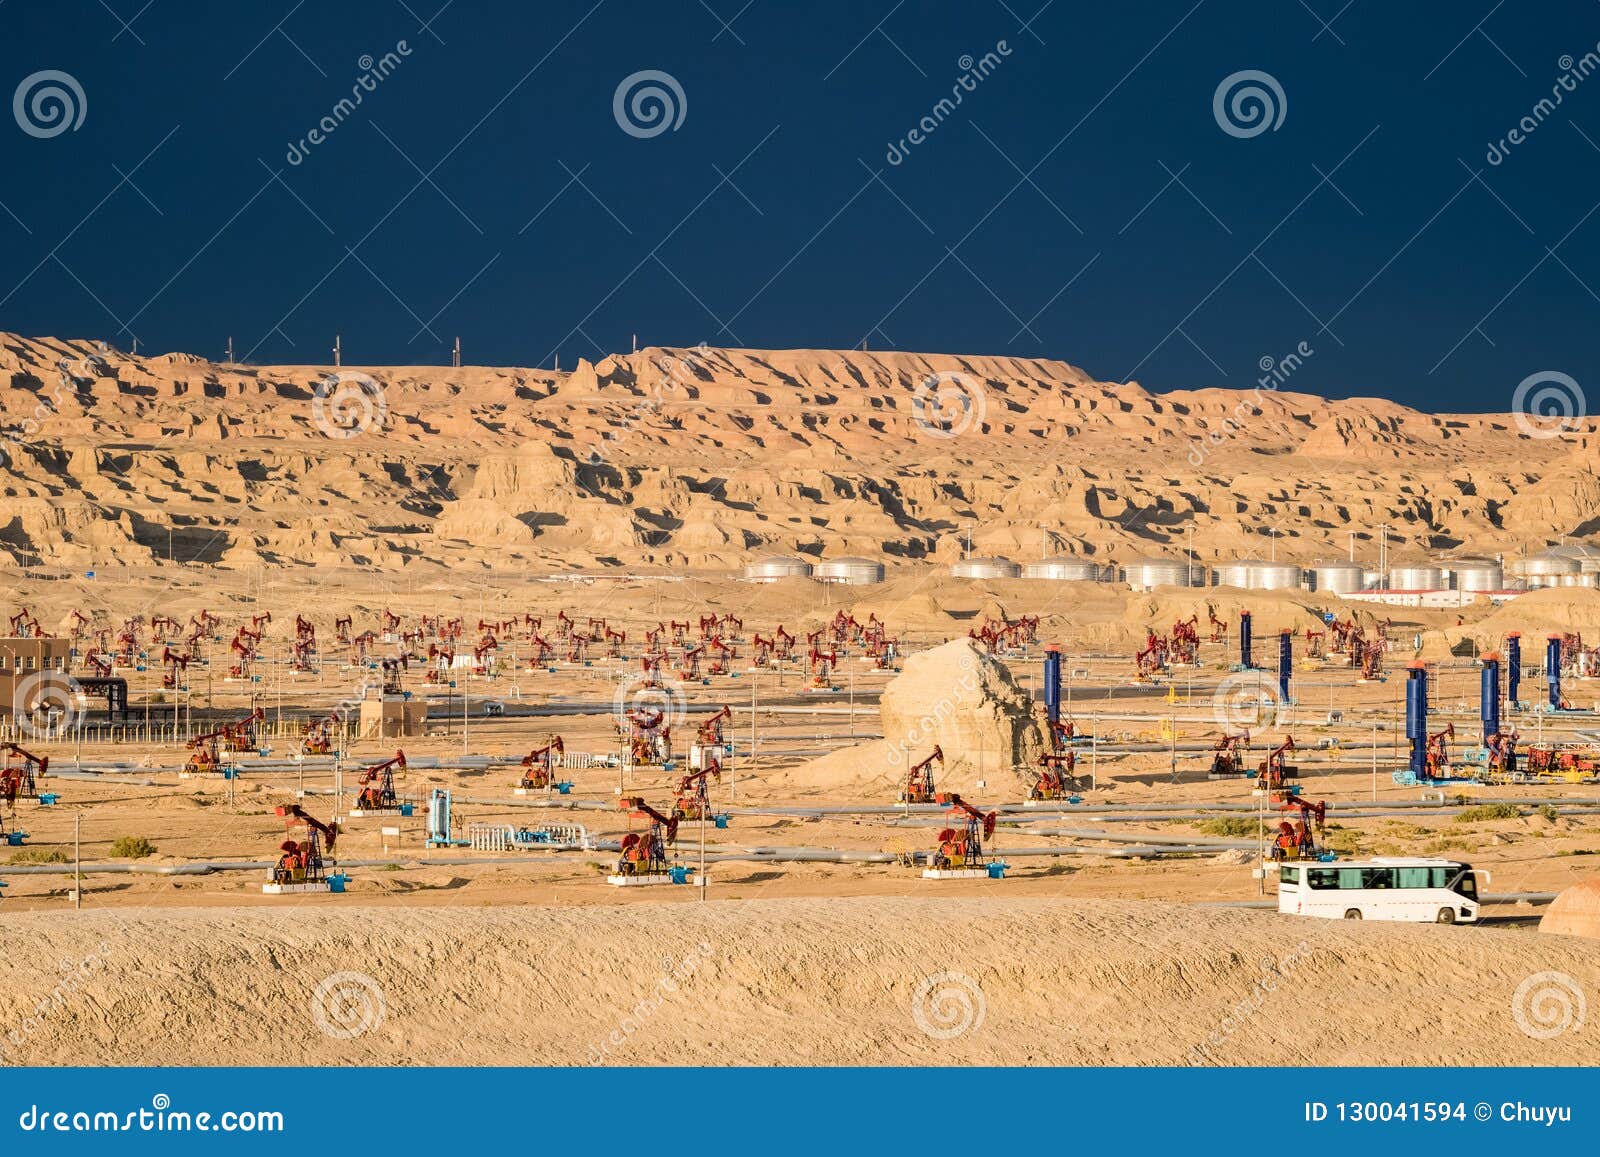 oil field on yardang landforms